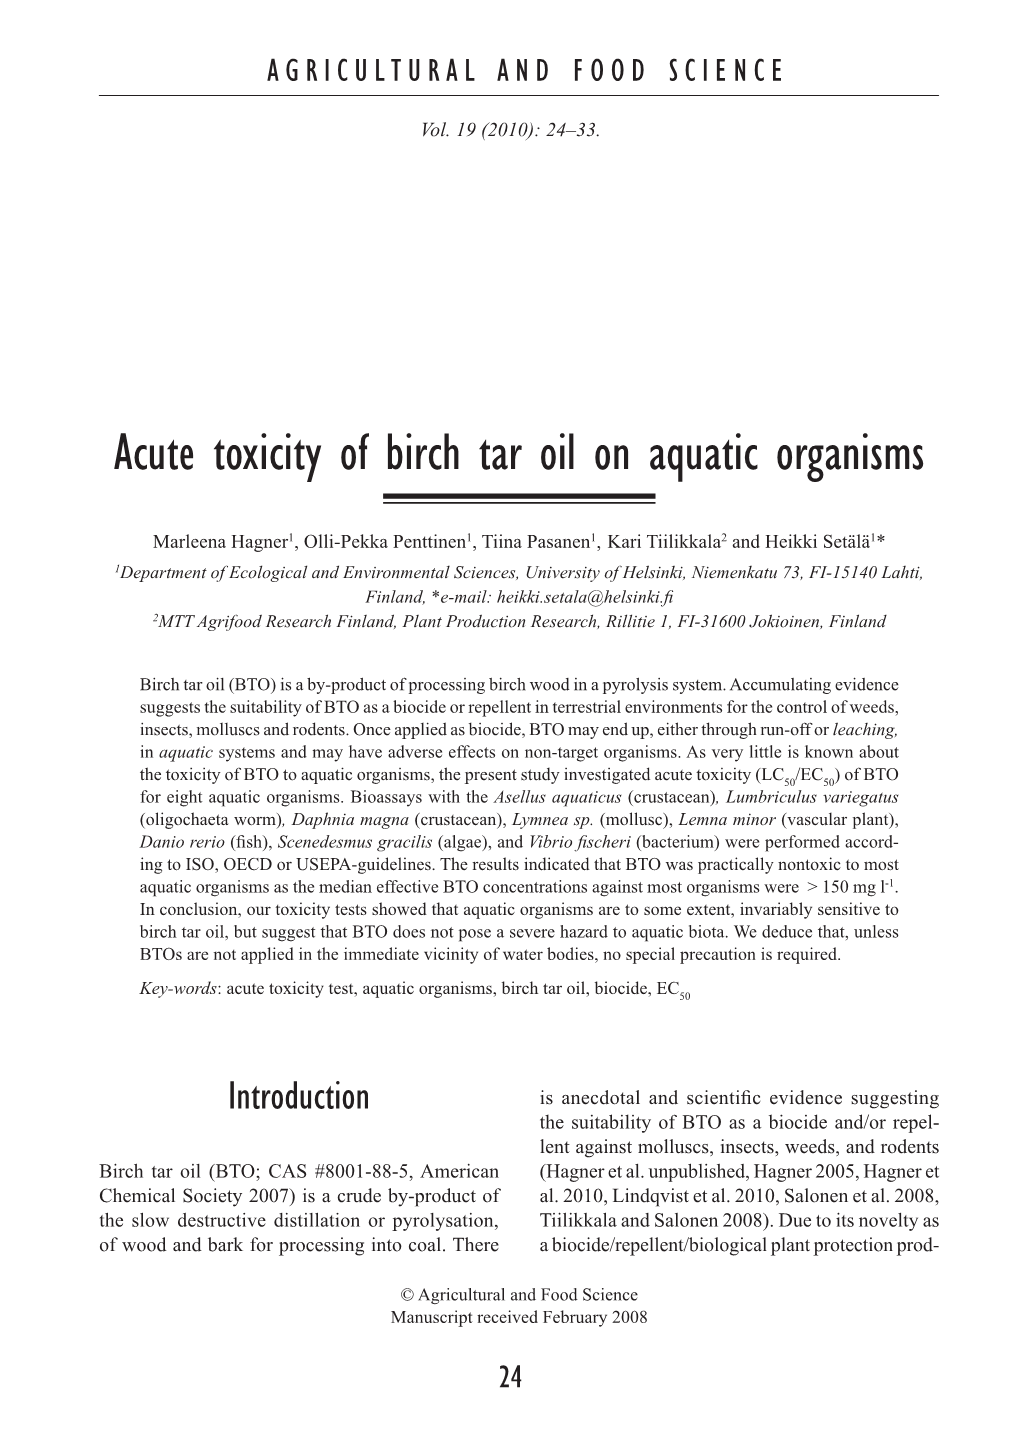 Acute Toxicity of Birch Tar Oil on Aquatic Organisms